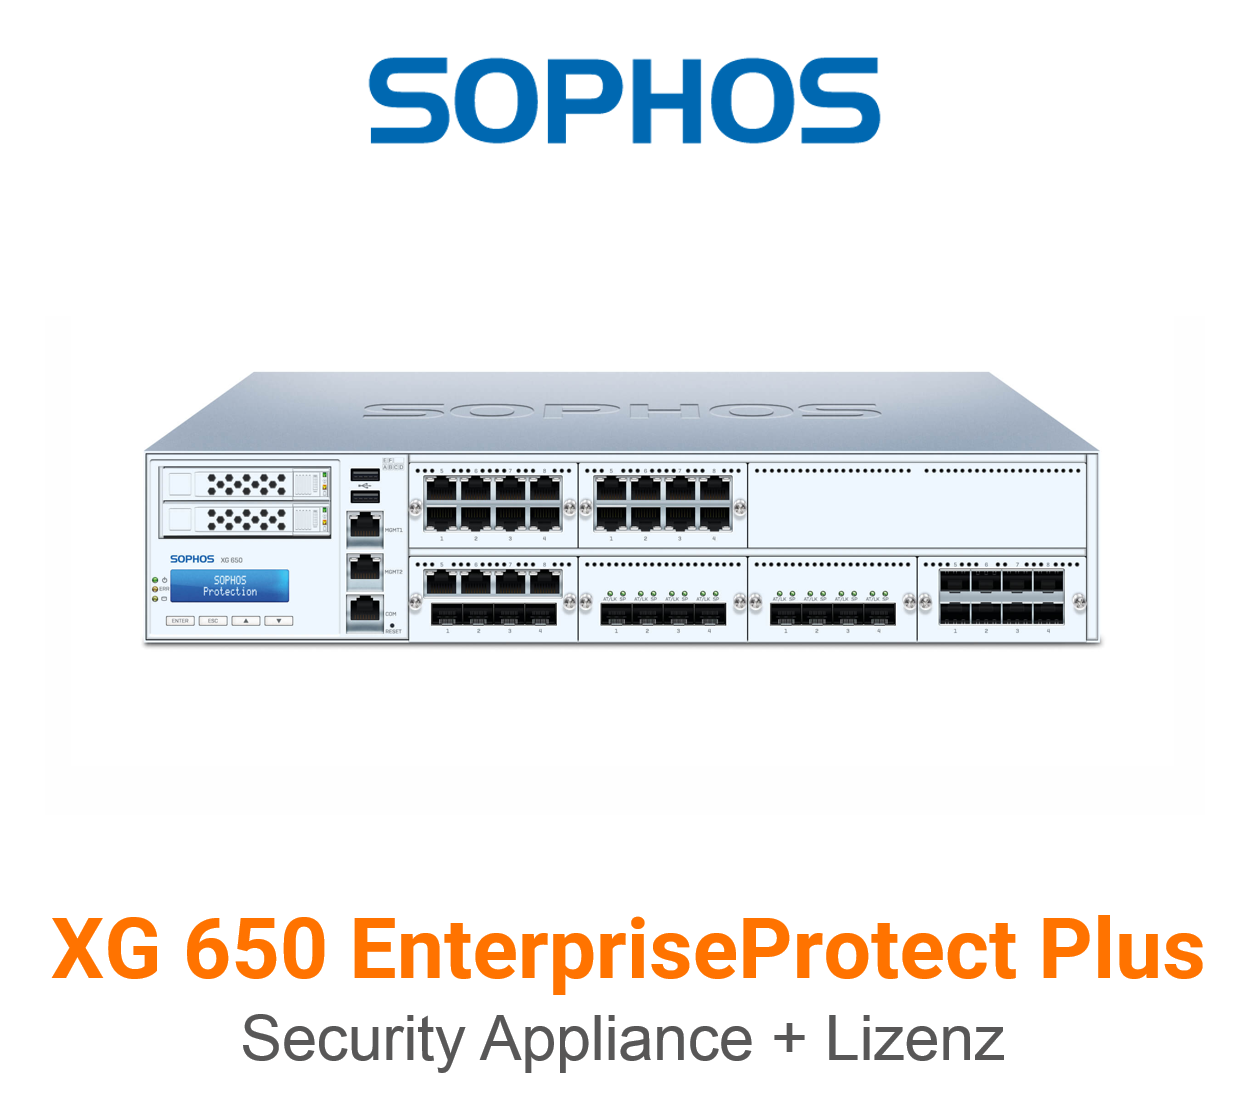 Sophos XG 650 EnterpriseProtect Plus Bundle (Hardware + Lizenz)